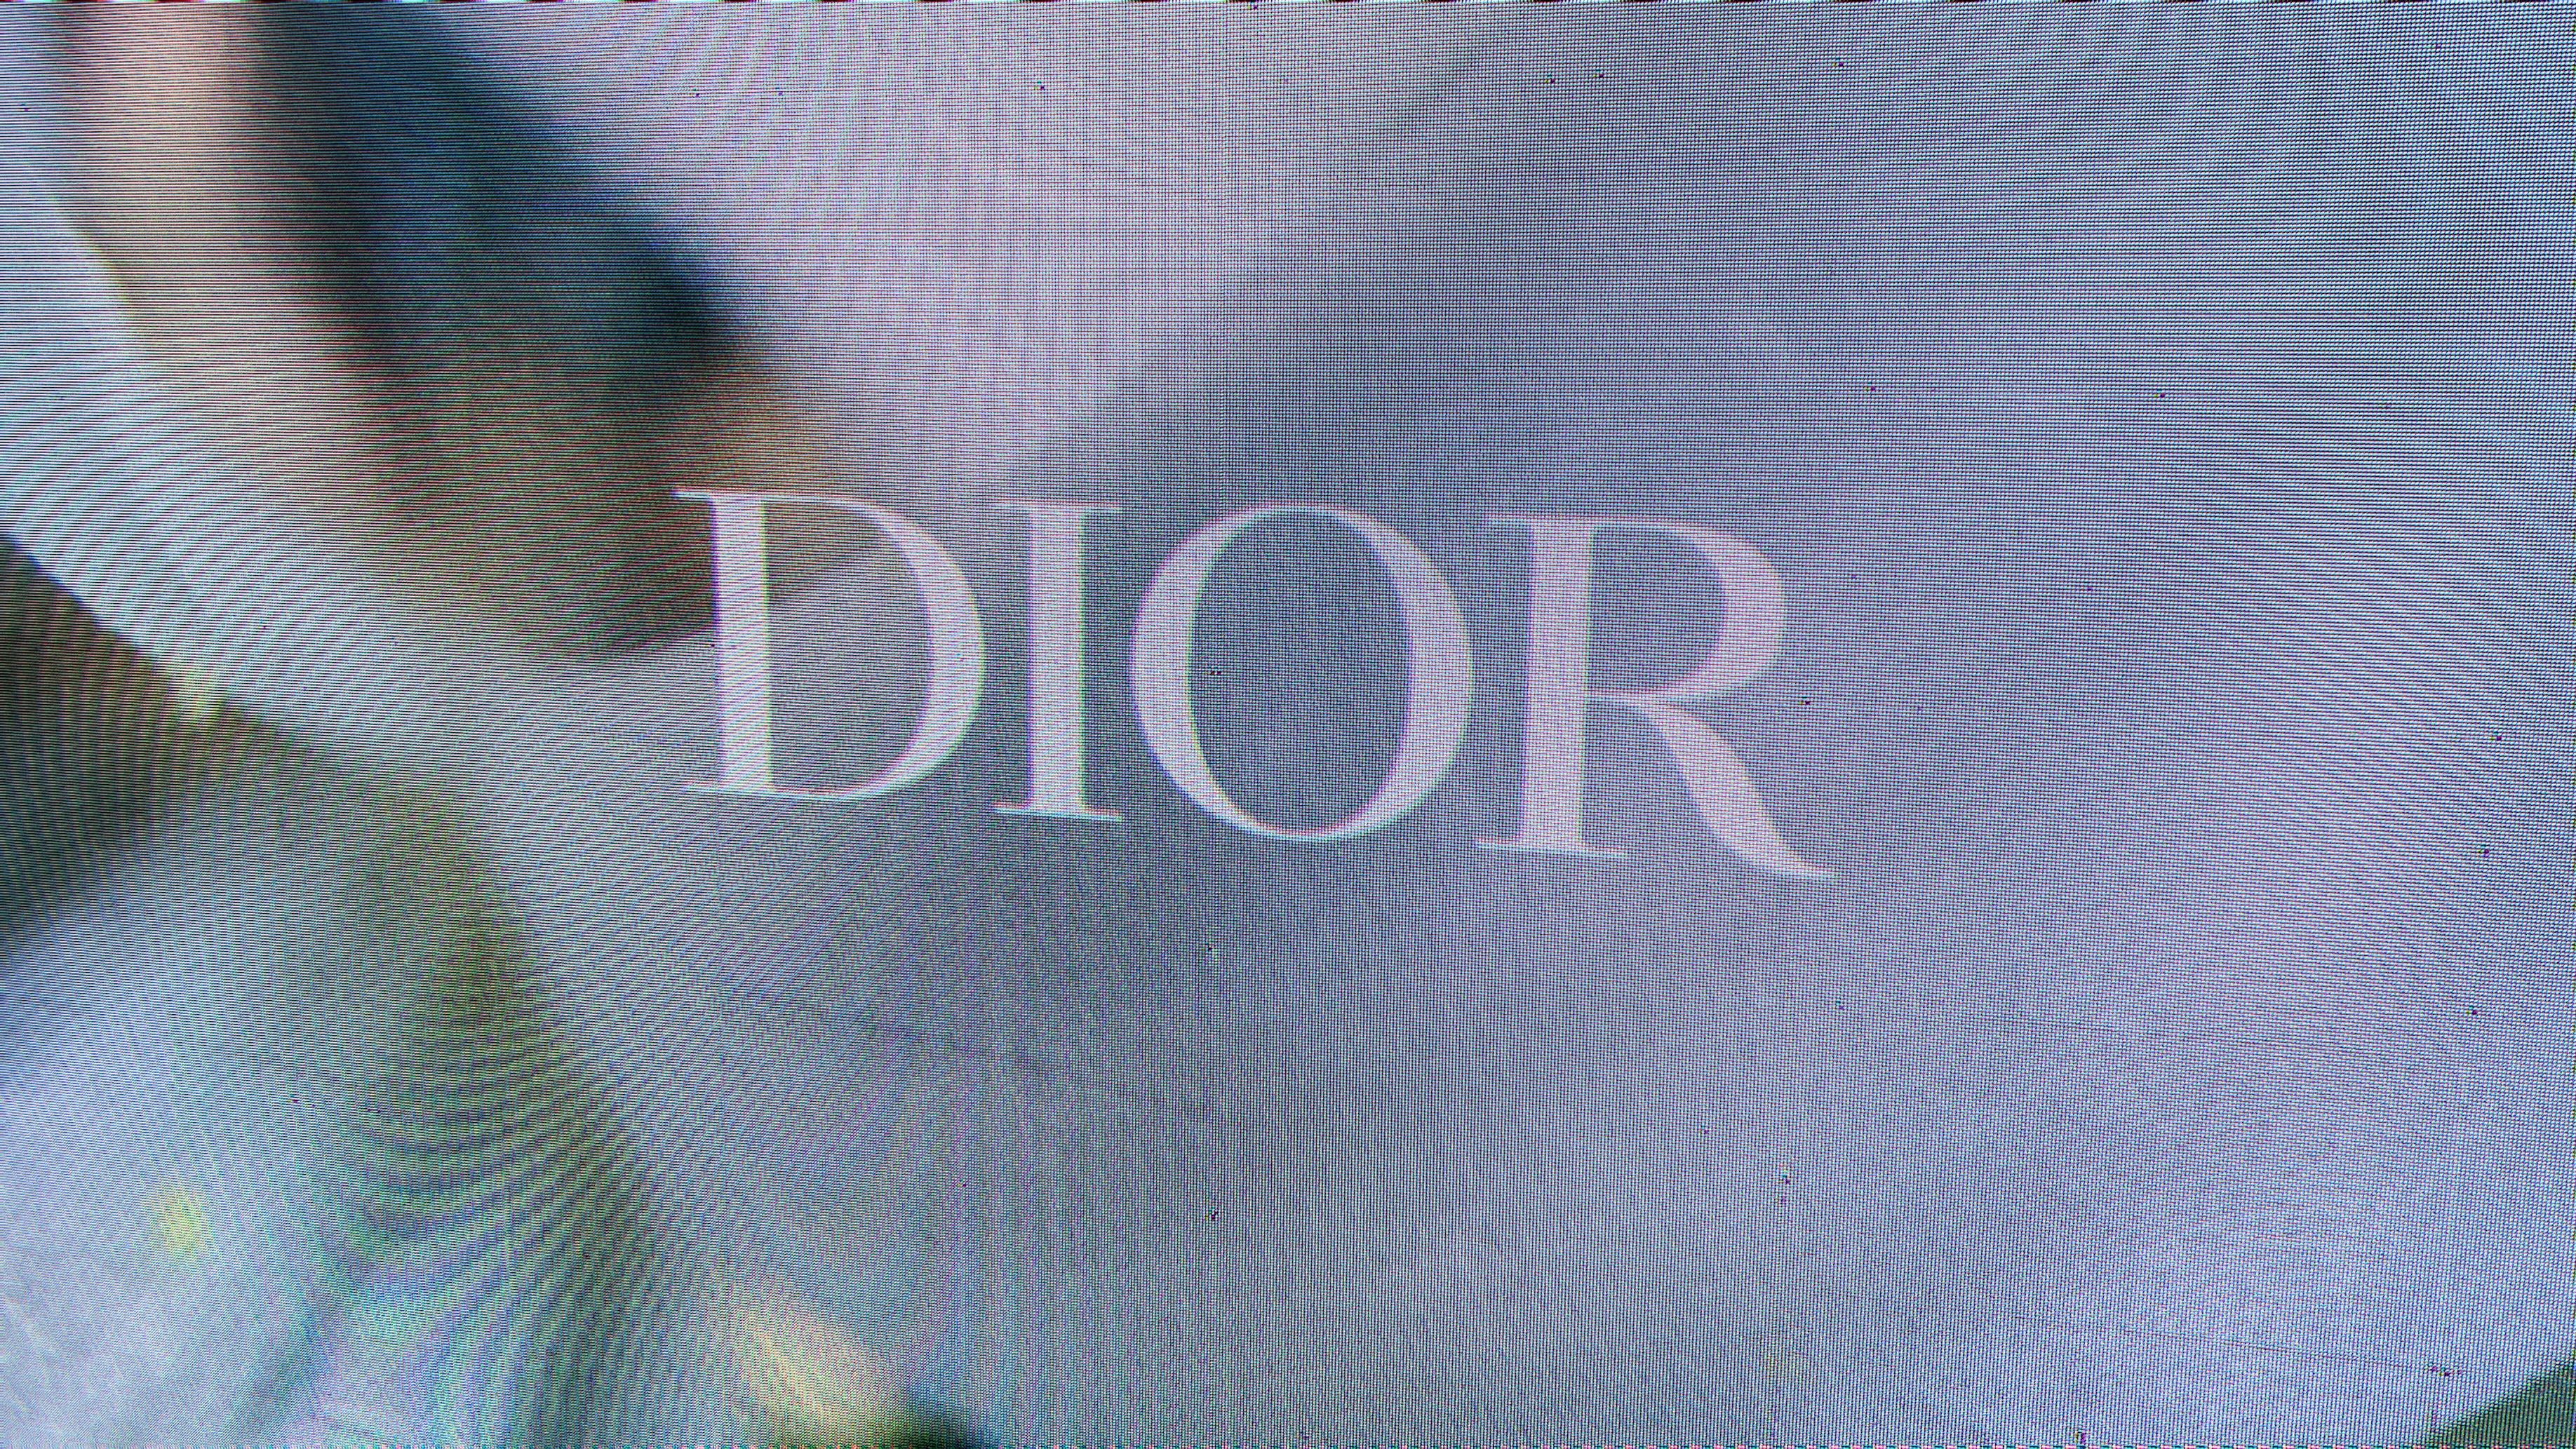 J’adore Dior agua water based